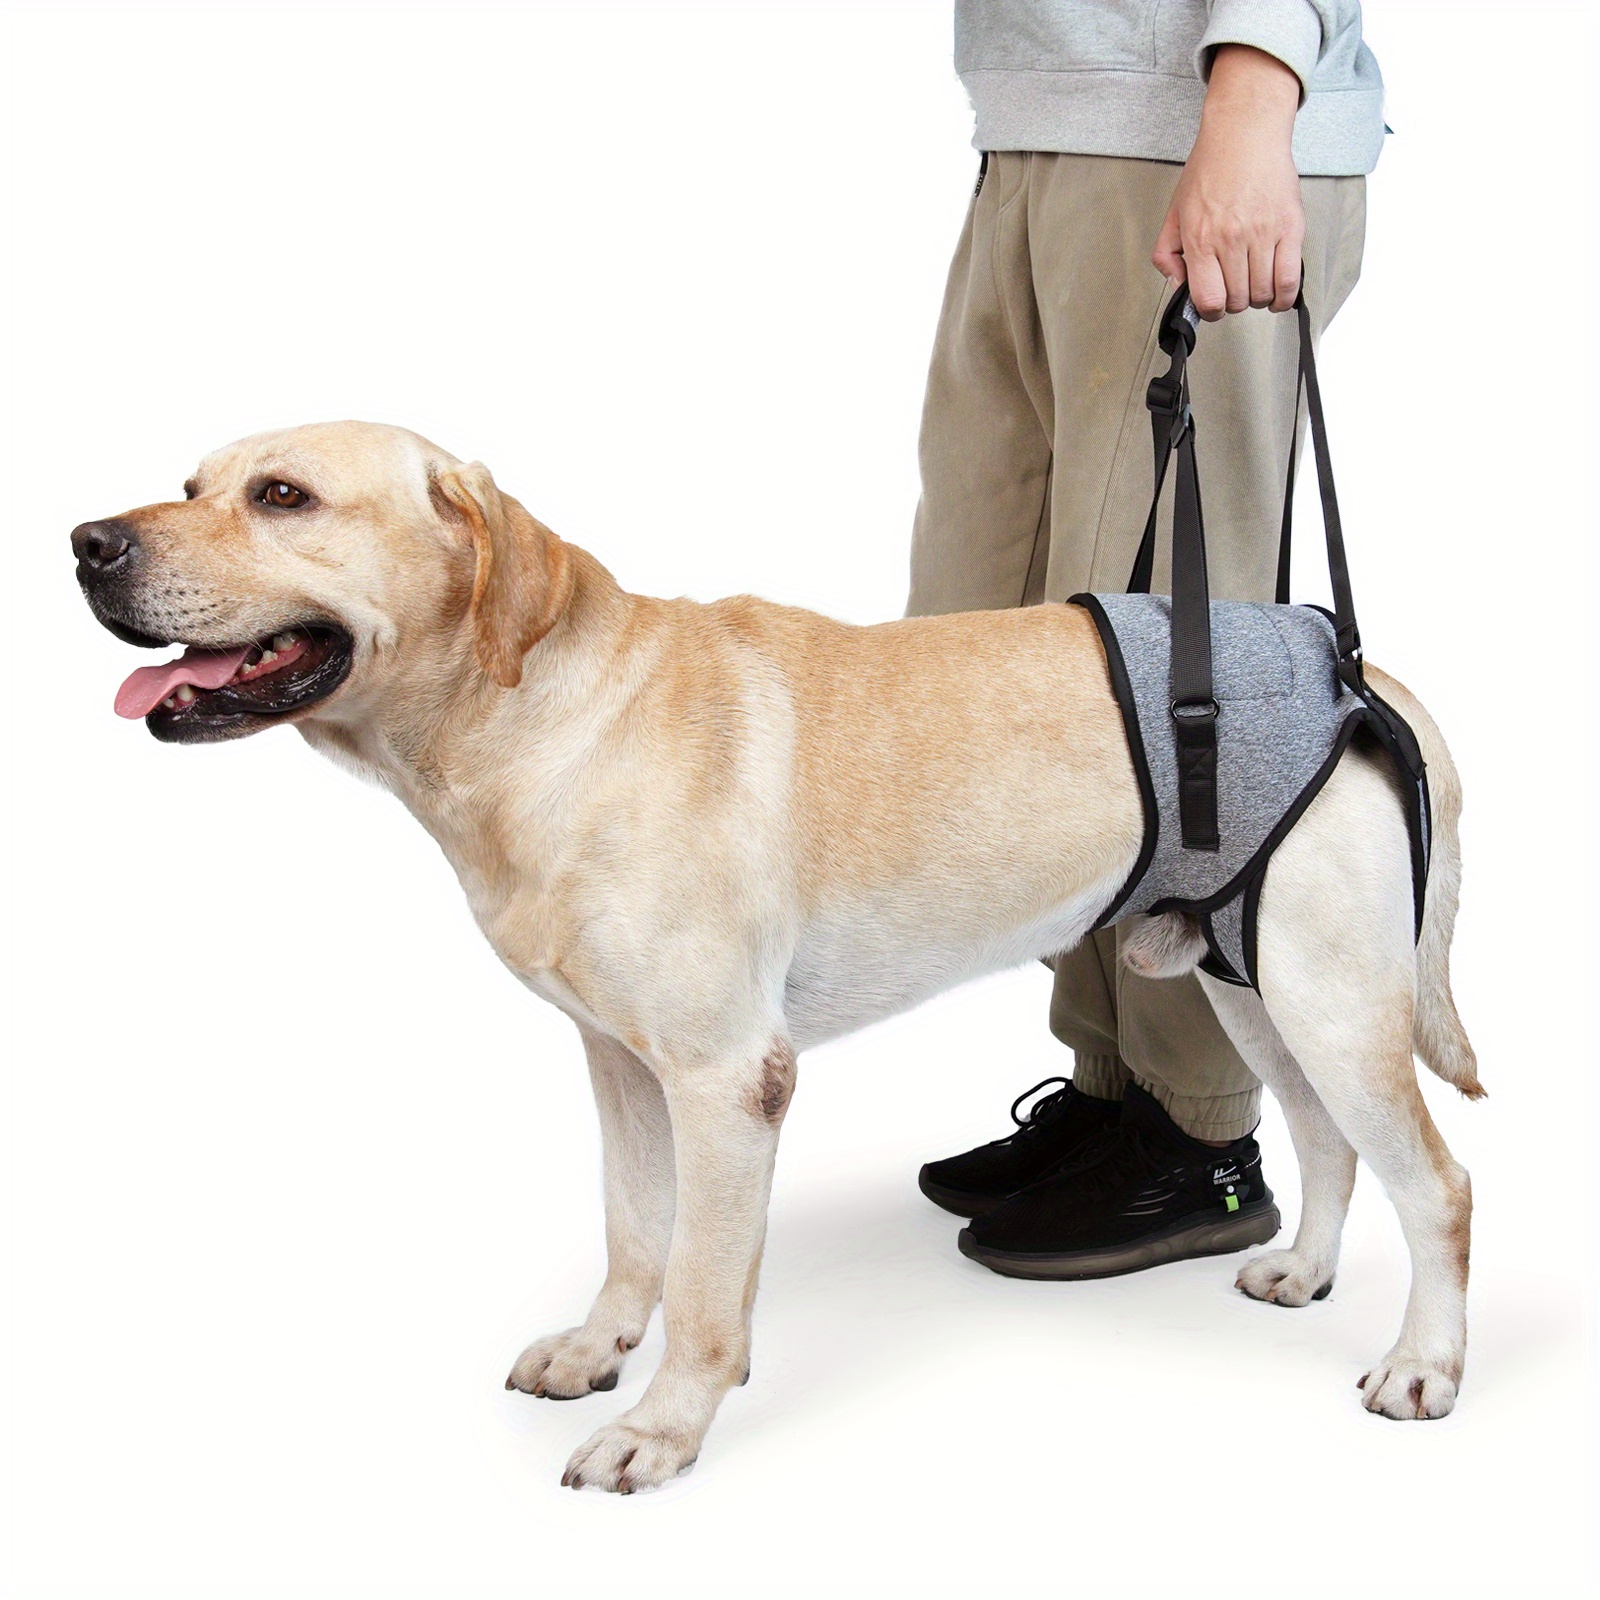 Dog Back Brace For IVDD, Back Brace Full Body Harness, Dog Back Protector